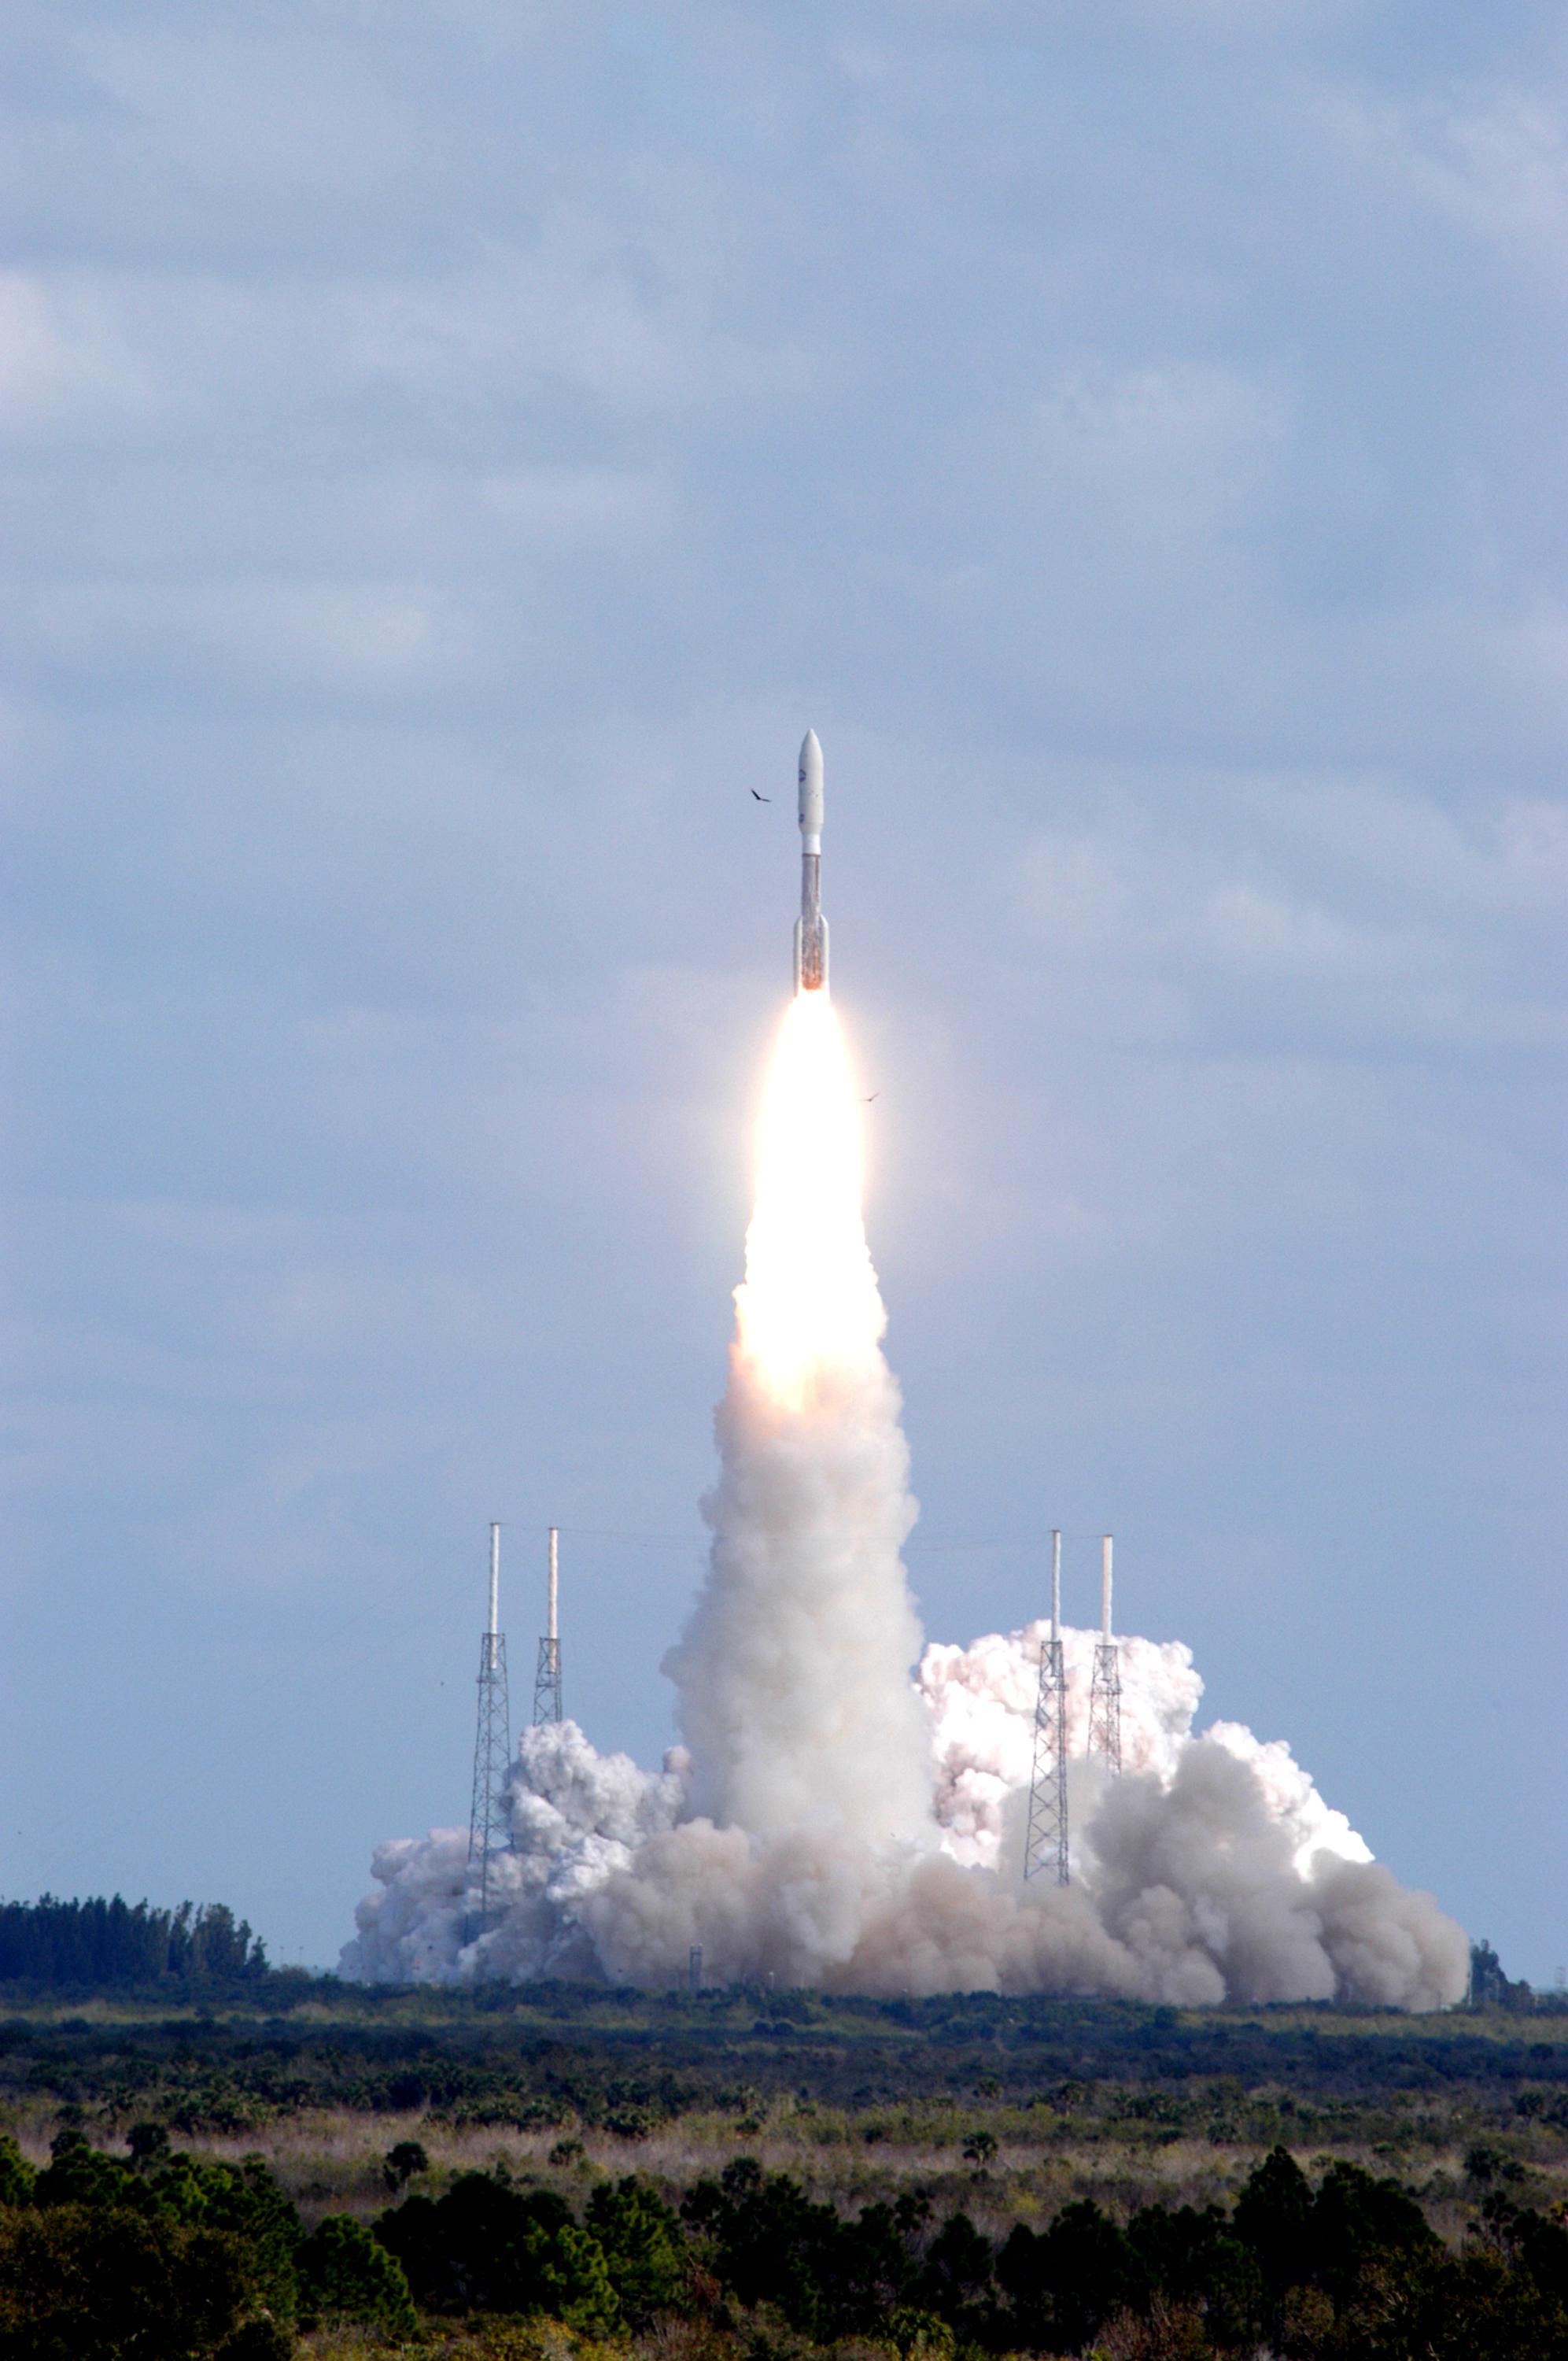 New Horizons launches aboard an Atlas V rocket